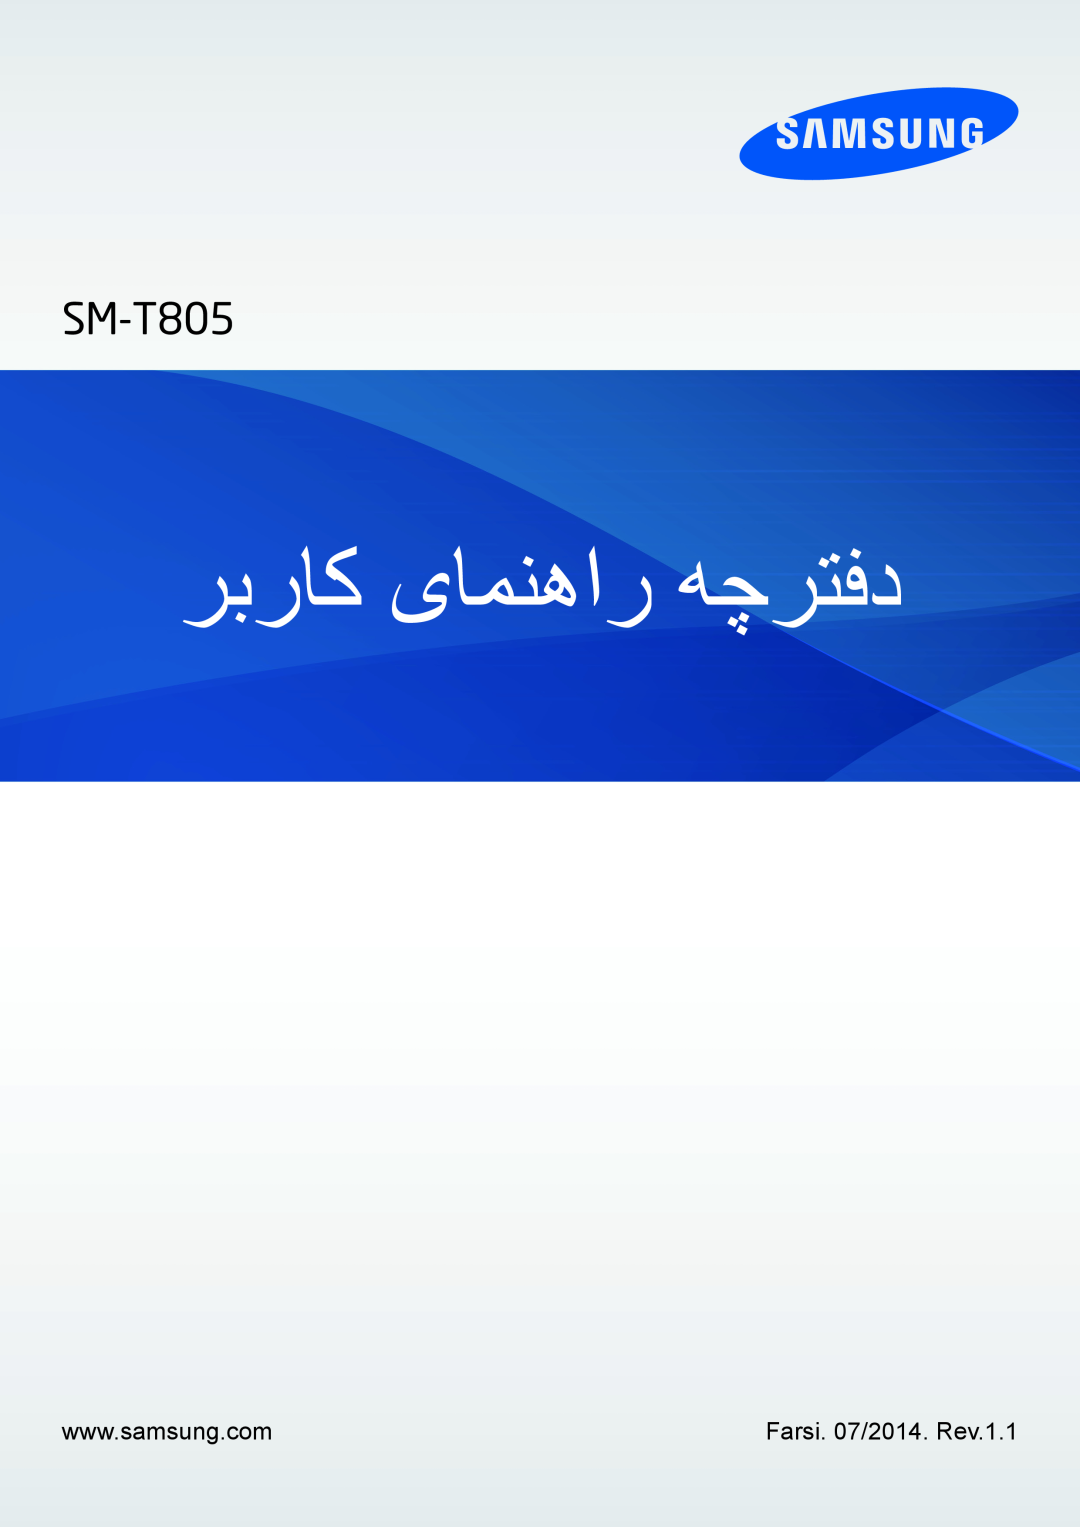 Samsung SM-T805NTSAKSA, SM-T805NTSAEGY, SM-T805NTSATHR, SM-T805NTSAAFR manual ربراک یامنهار هچرتفد, Farsi. 07/2014. Rev.1.1 